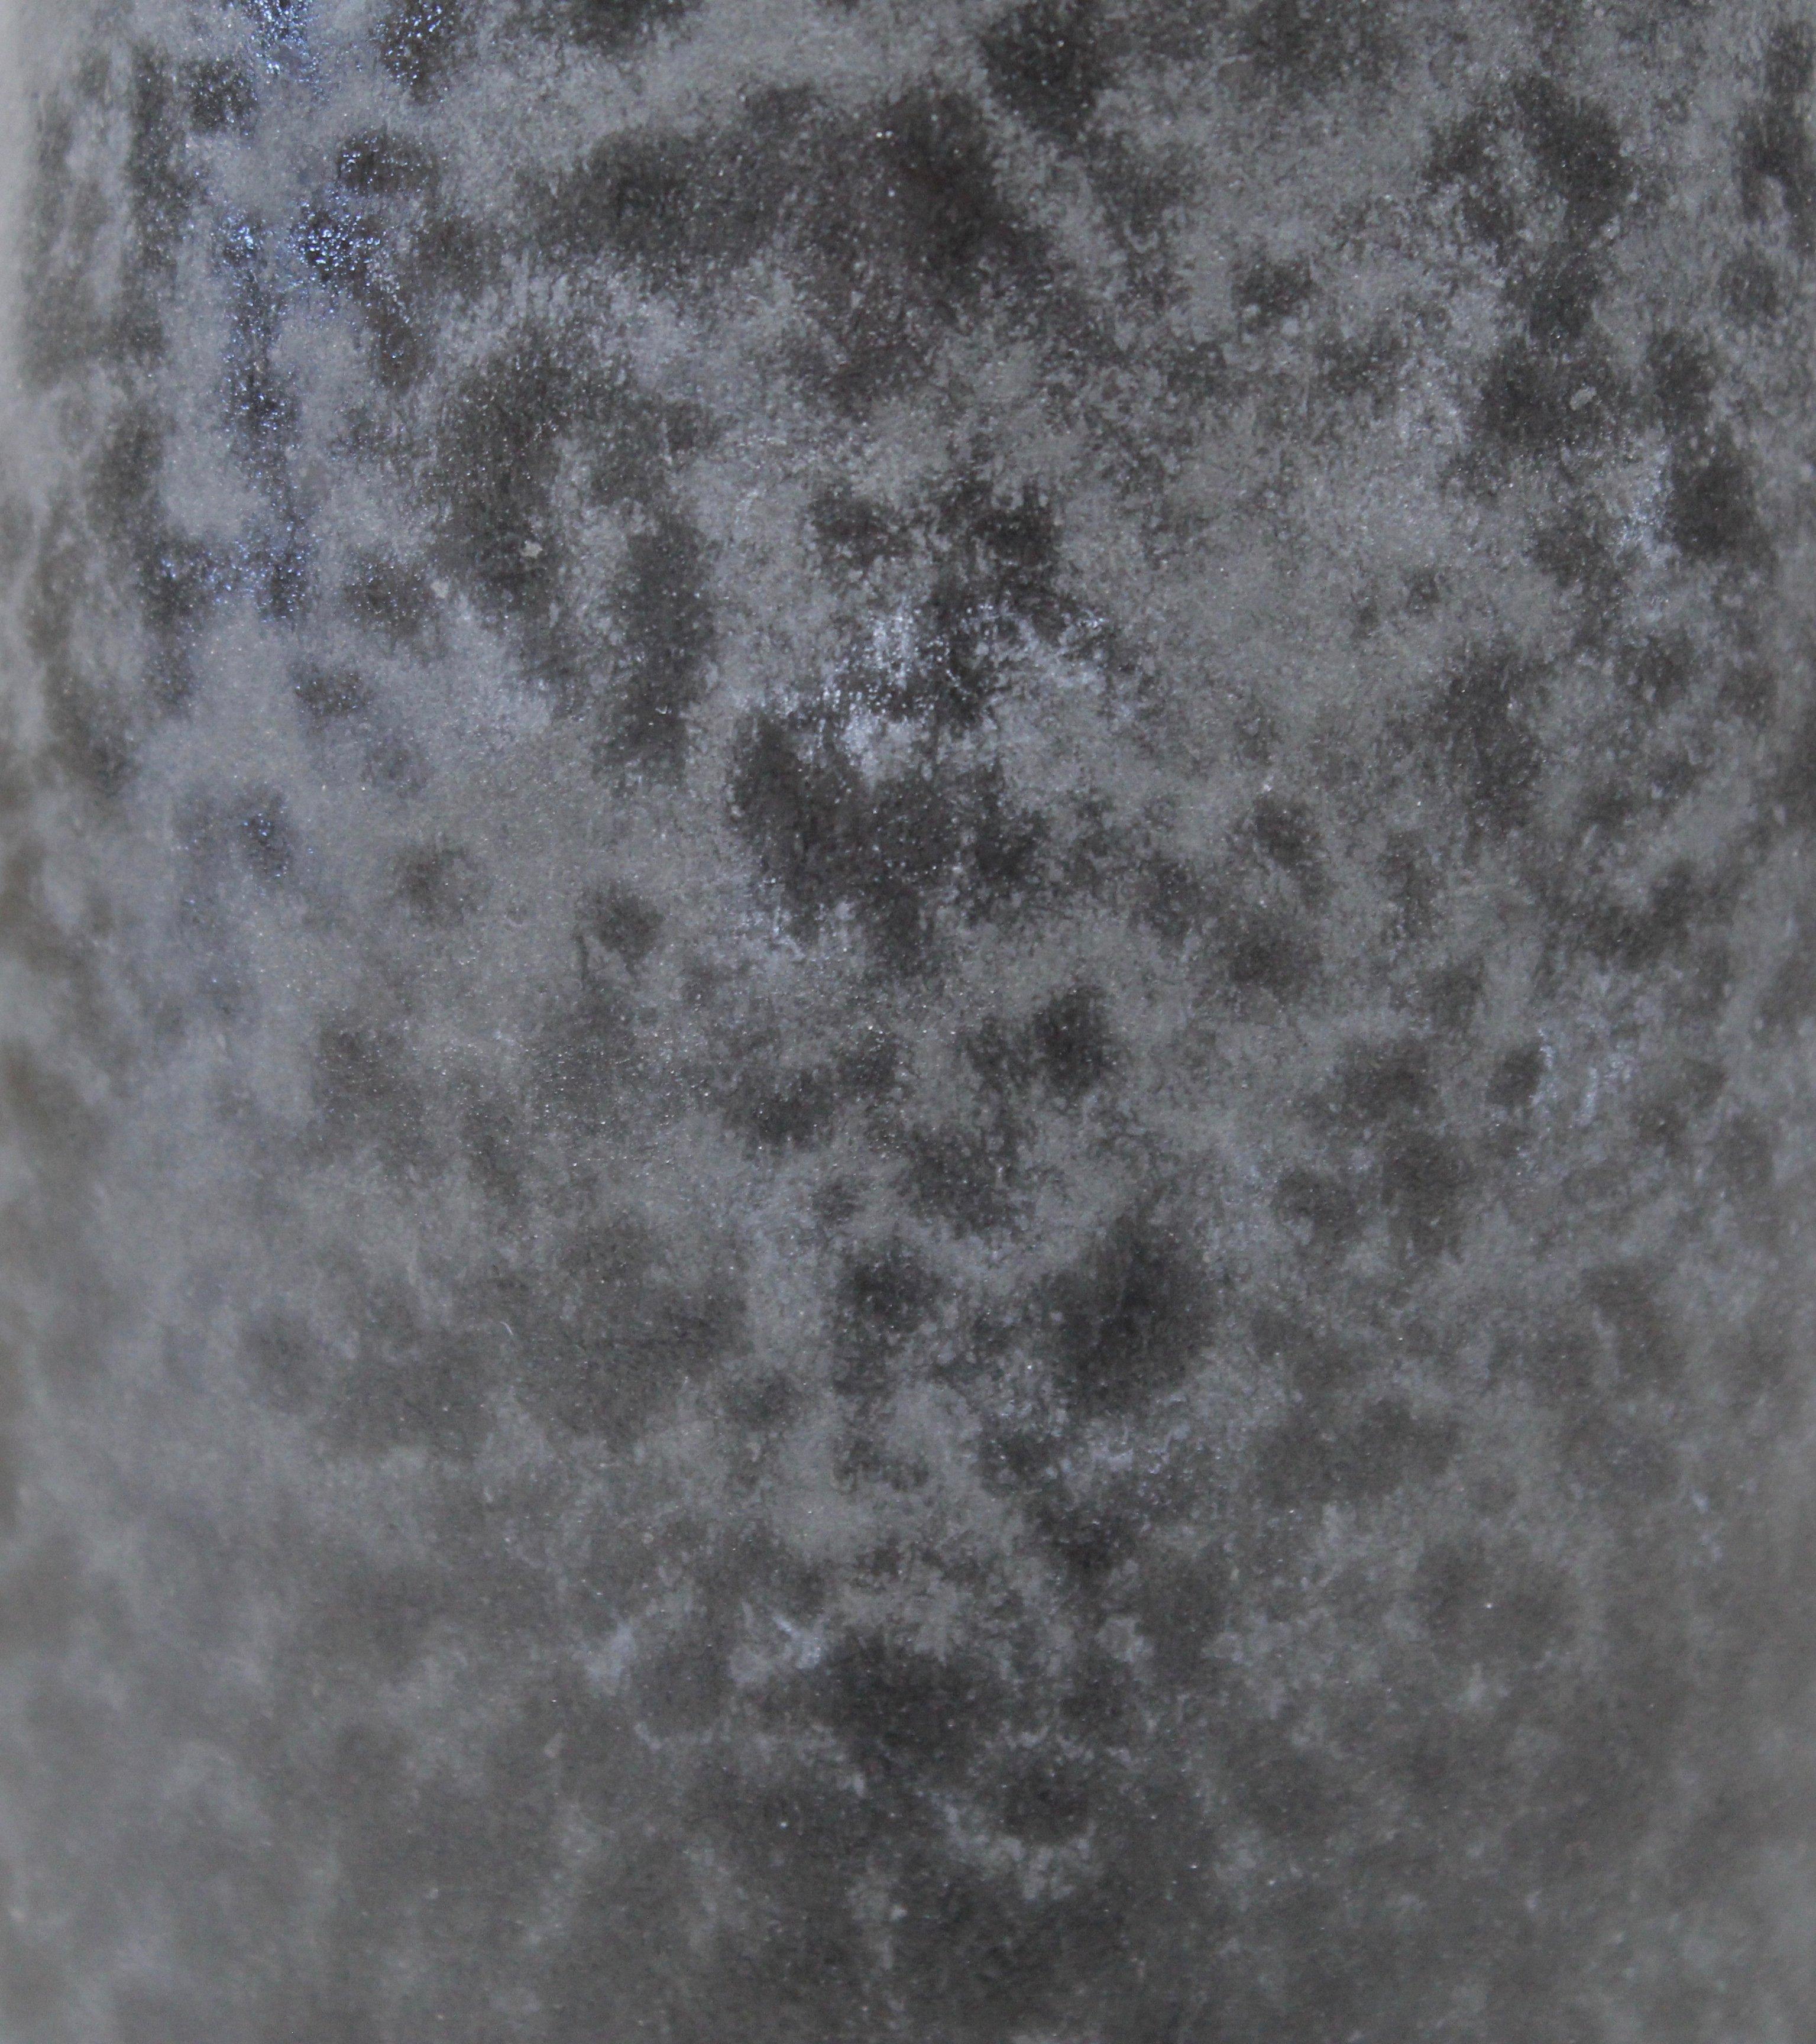 KH Würtz Tapering Cone Vase in Black Glaze In Excellent Condition In London, GB